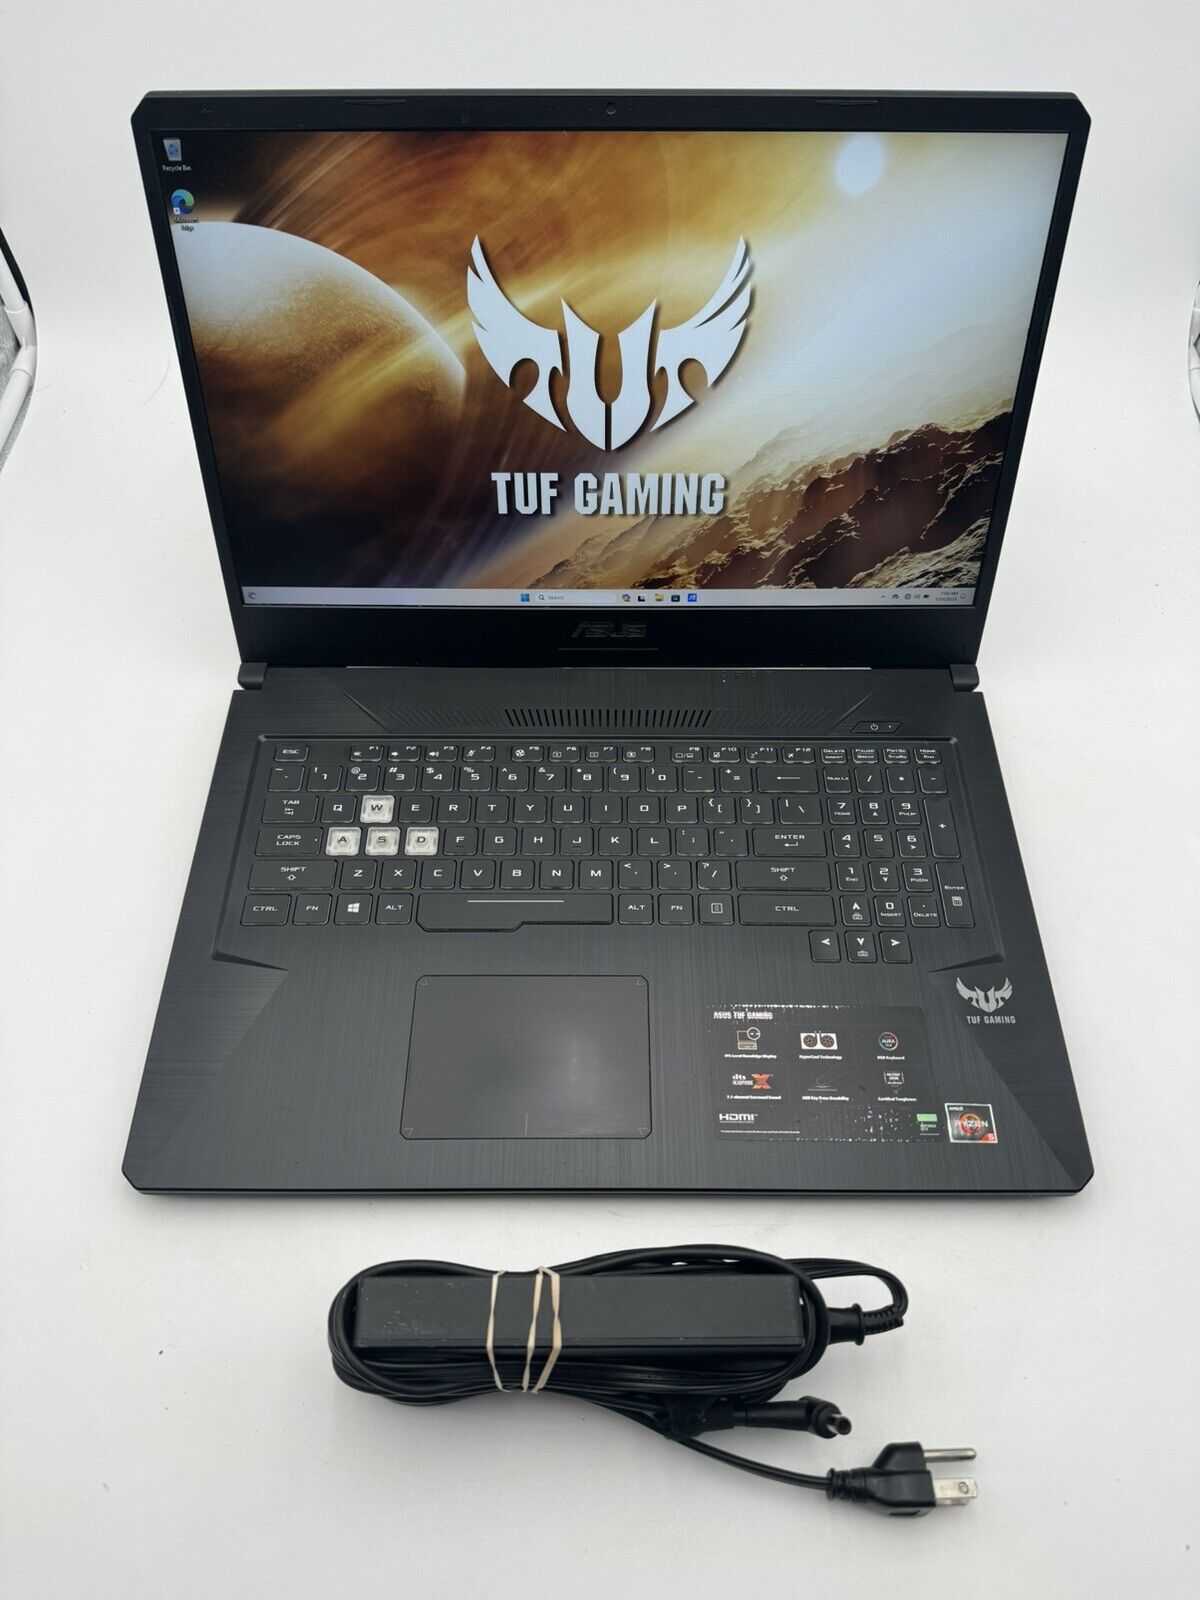 ASUS TUF Gaming Laptop FX705DT 17.3” Ryzen 5 3550H 8GB Ram 512GB SSD GTX 1650